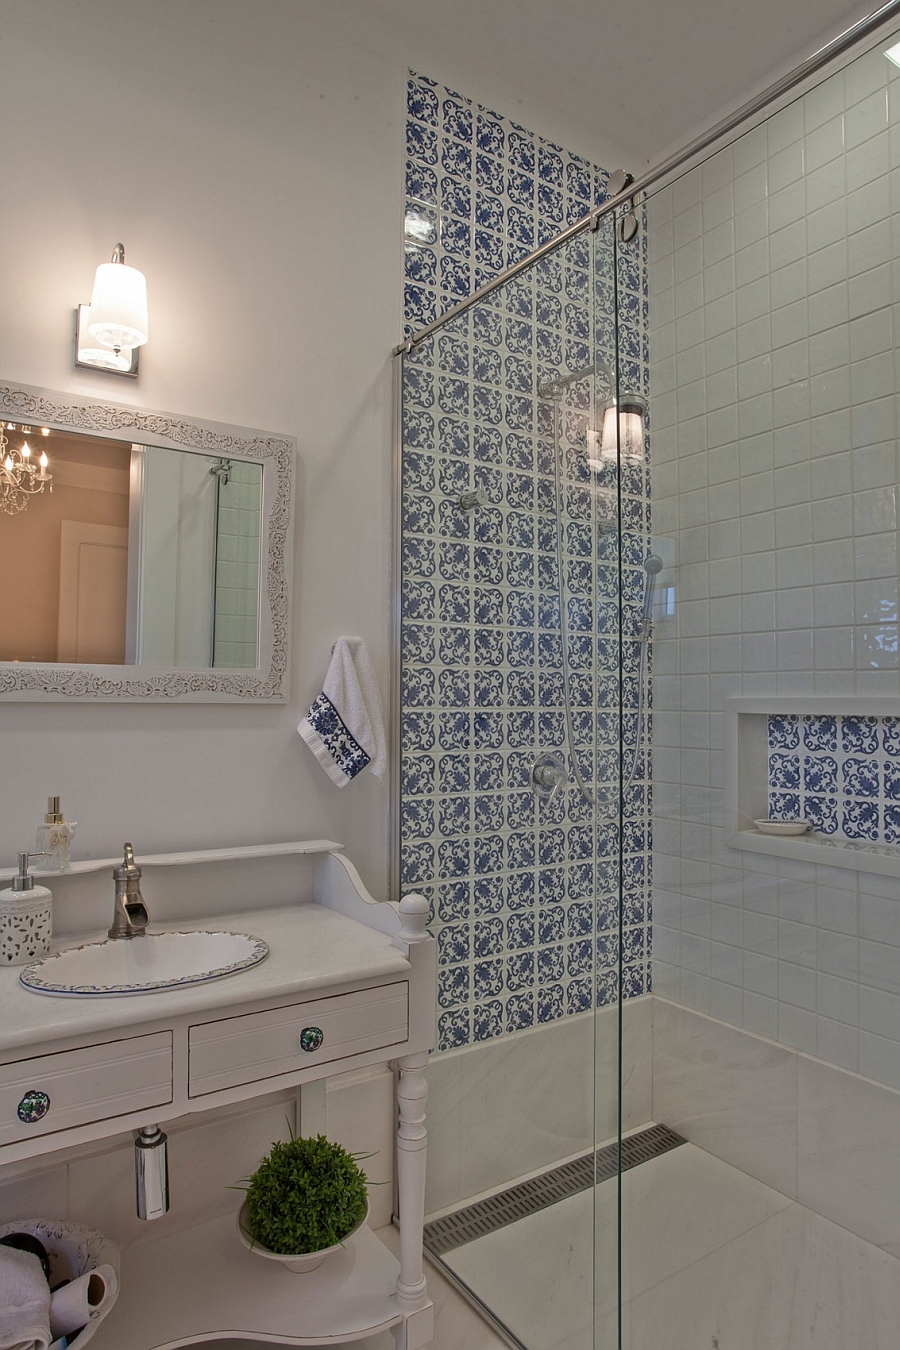 Splash of blue pattern using tile in the shower area